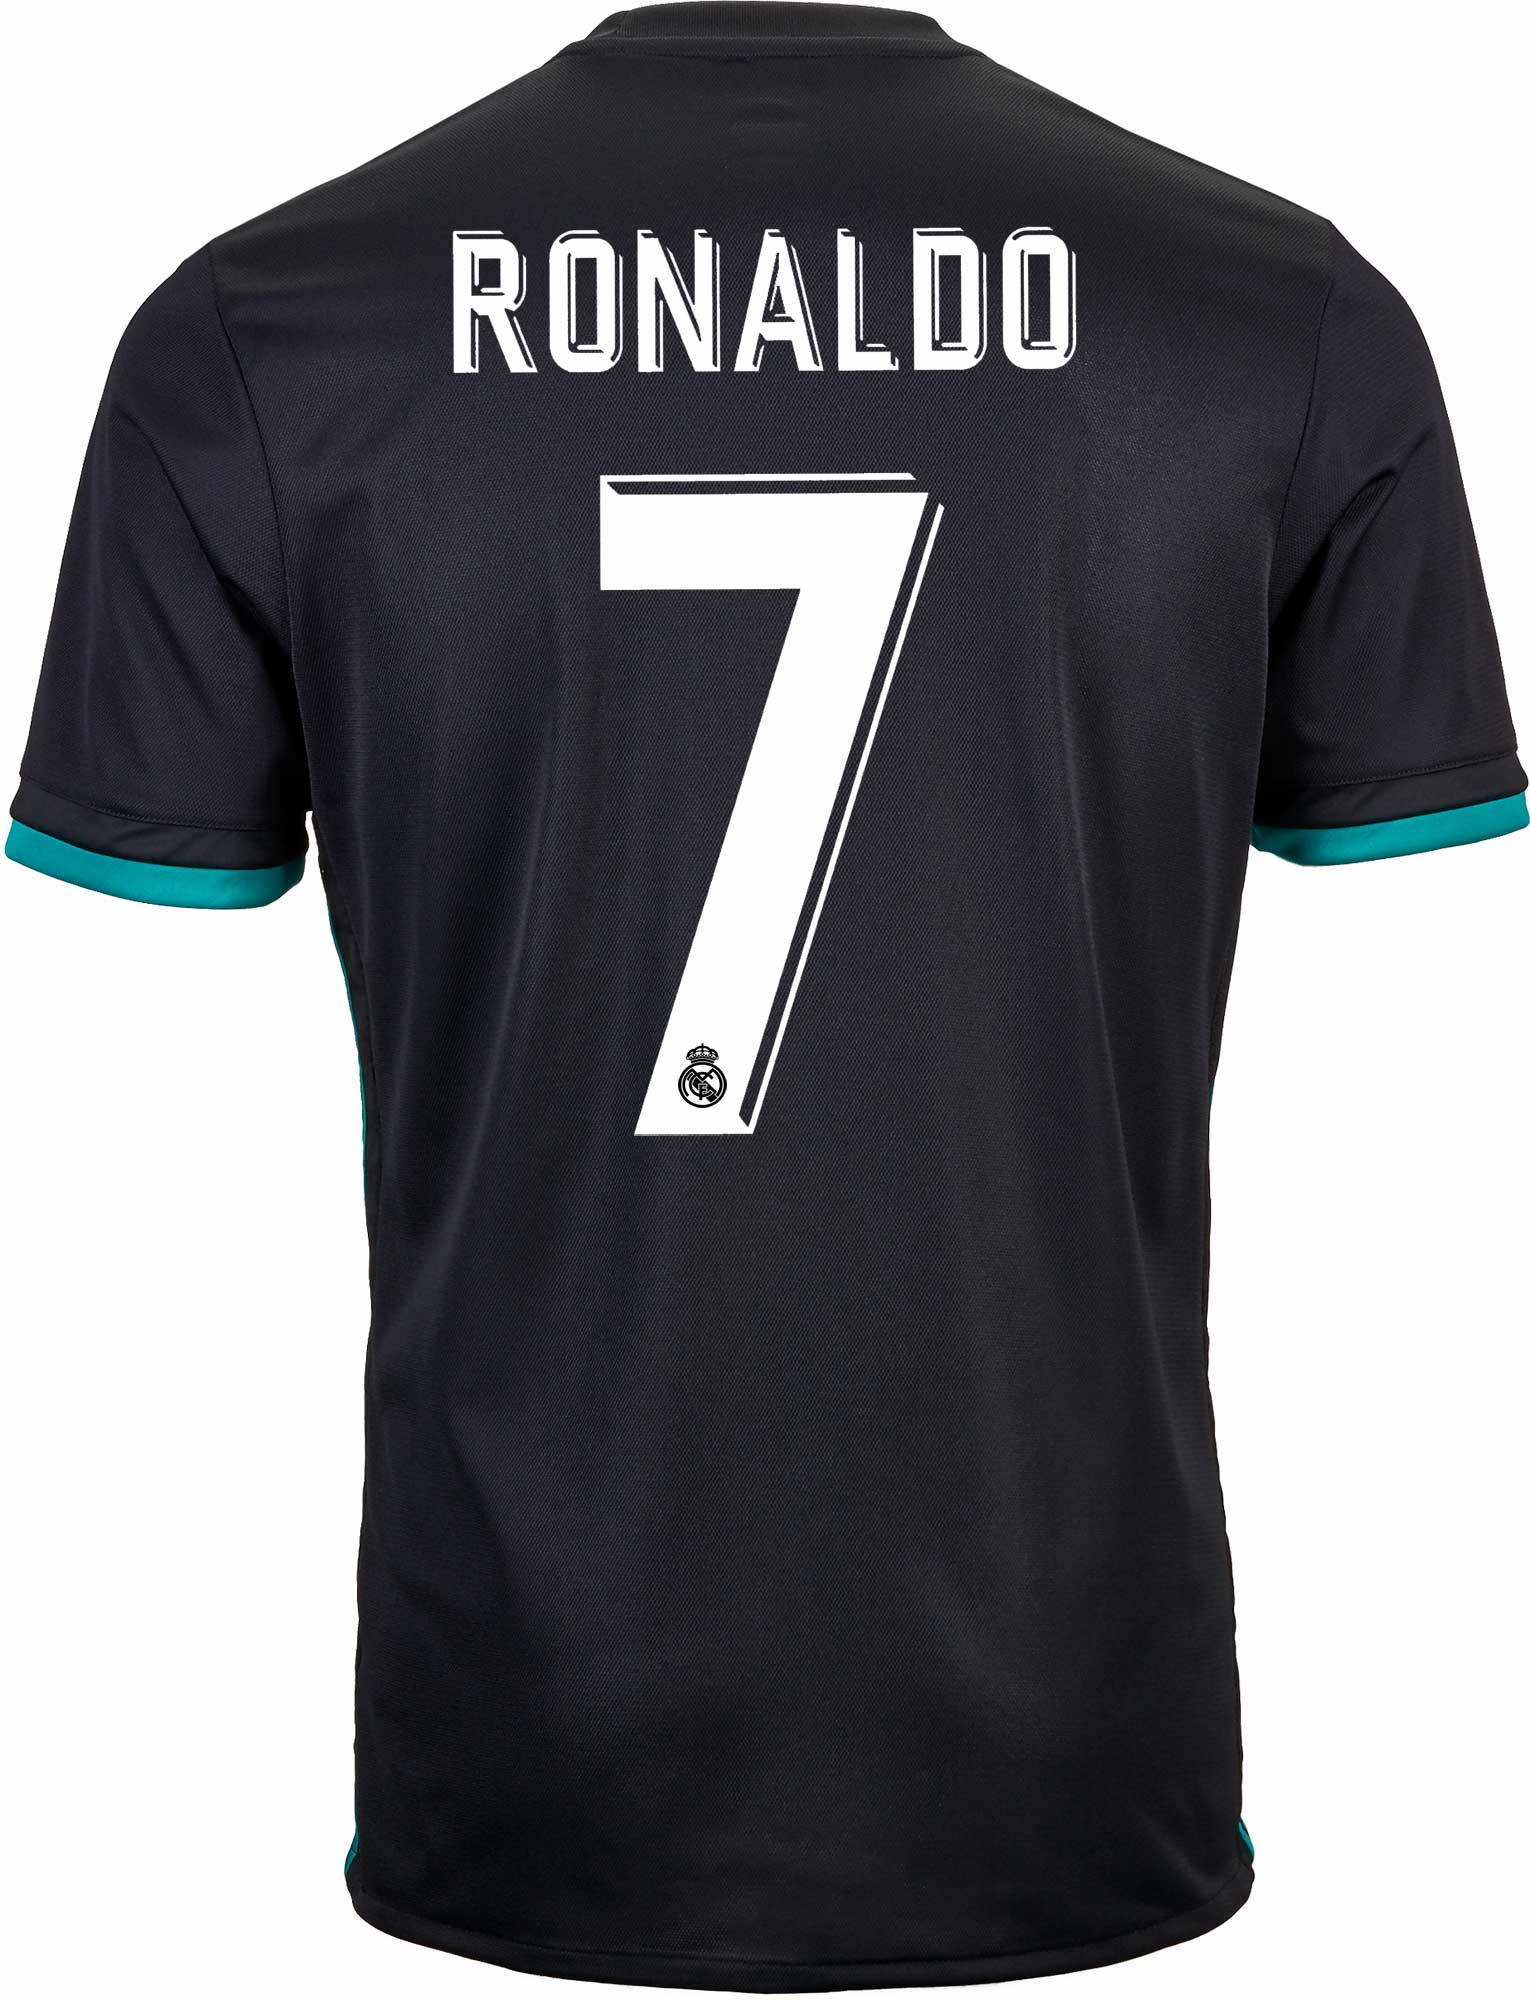 Verward zijn Plantage troosten adidas Cristiano Ronaldo Real Madrid Away Jersey 17-18